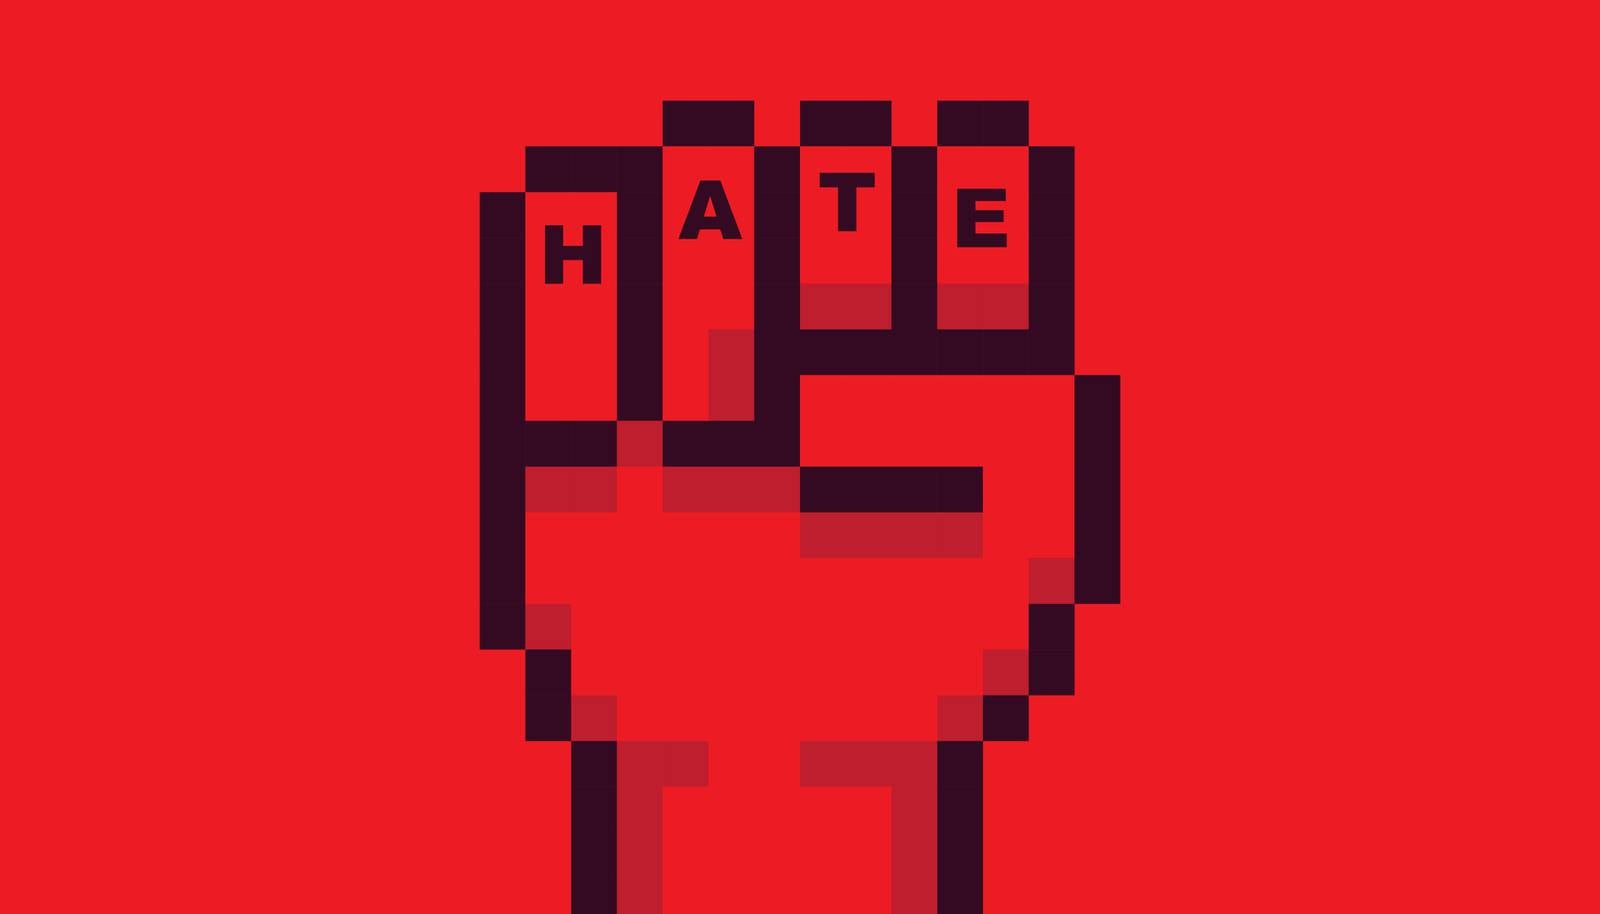 Hate speech online